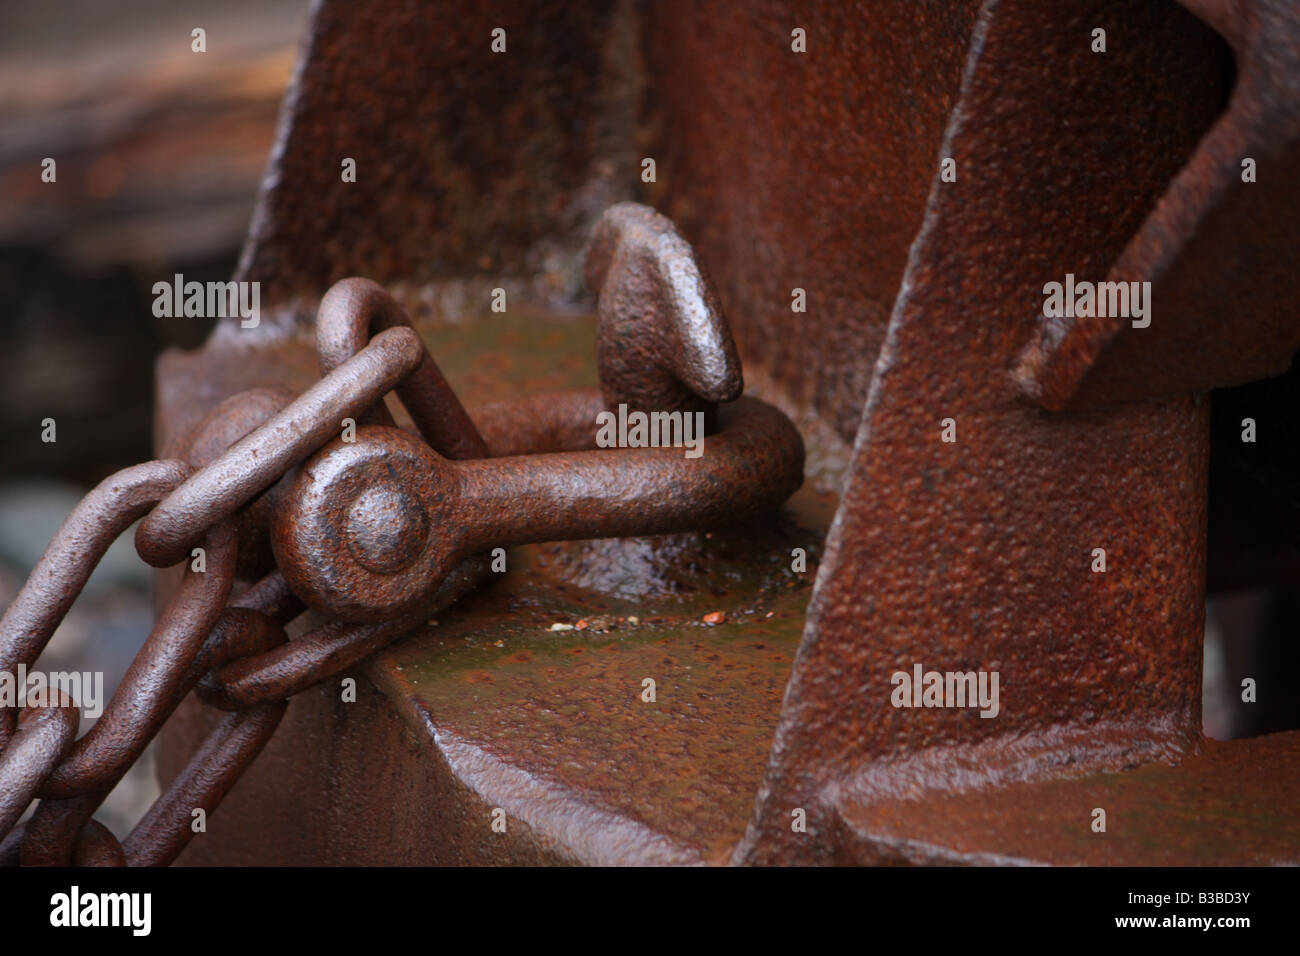 A close up photograph of a rusty old coal cart Stock Photo